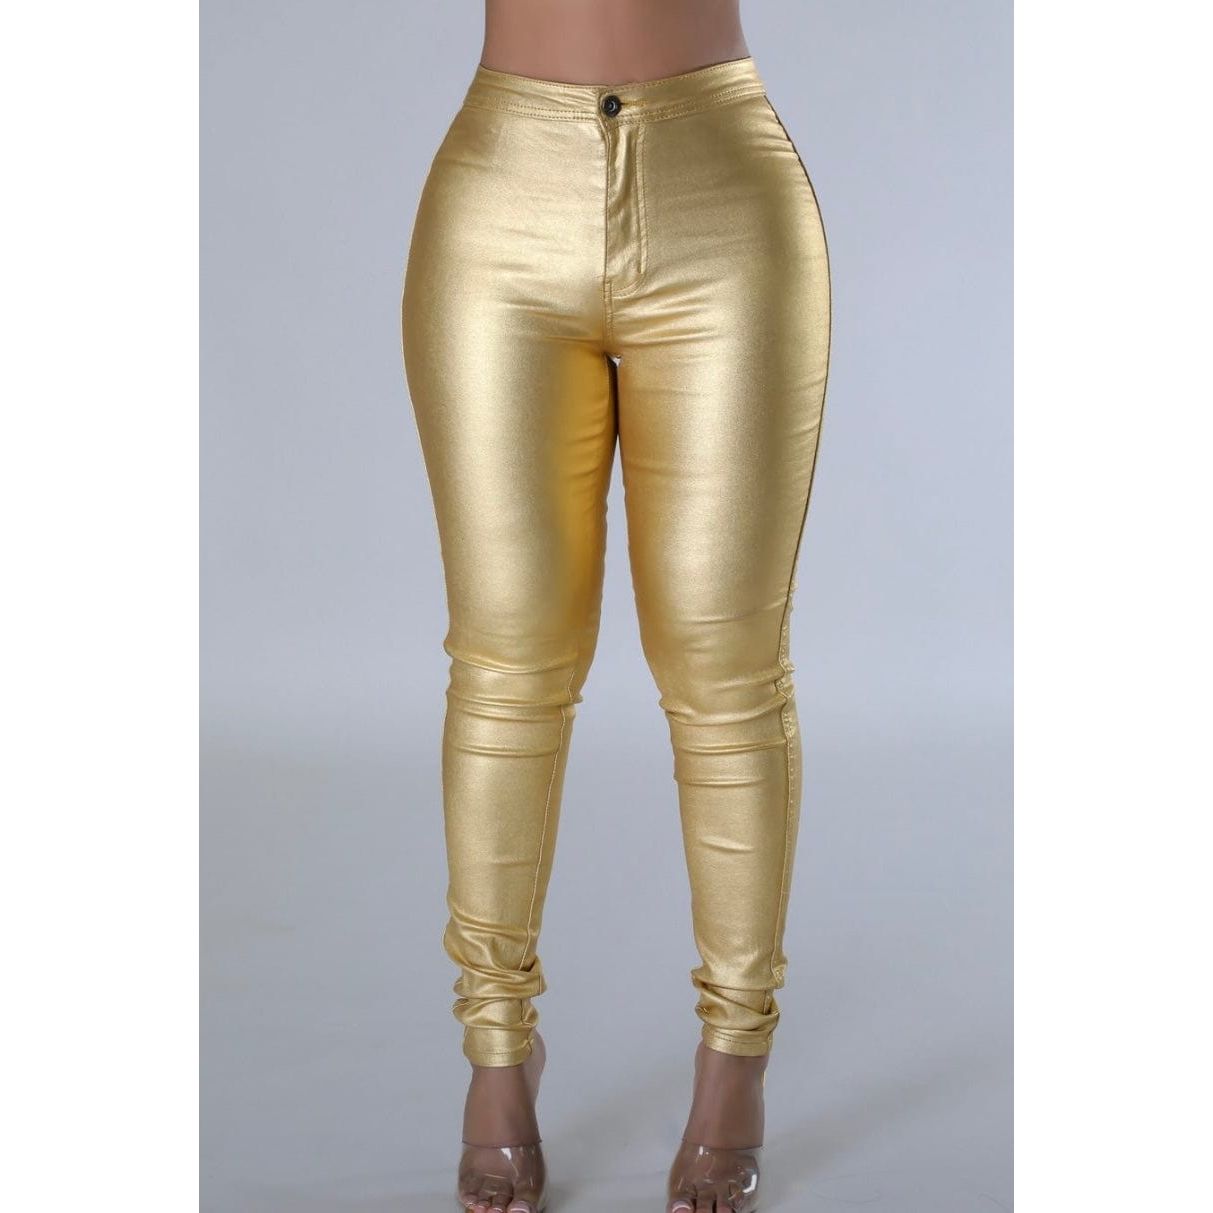 Gold Iridescent Pants